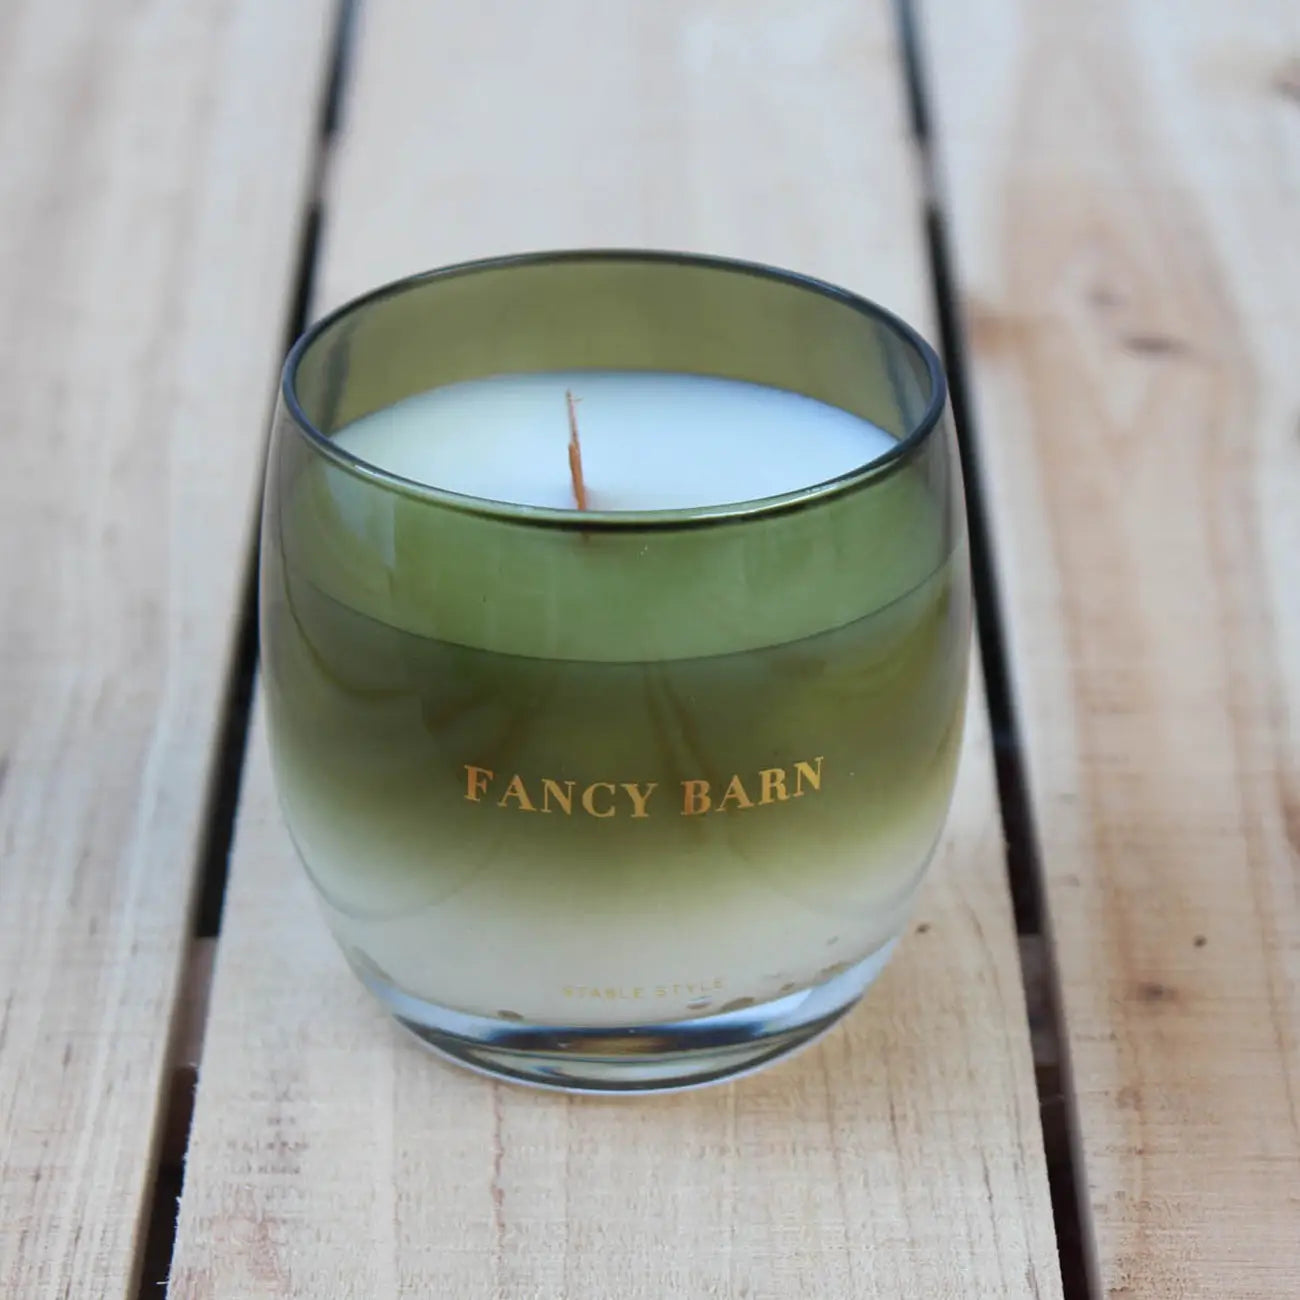 Fancy Barn Soy Wax Candle